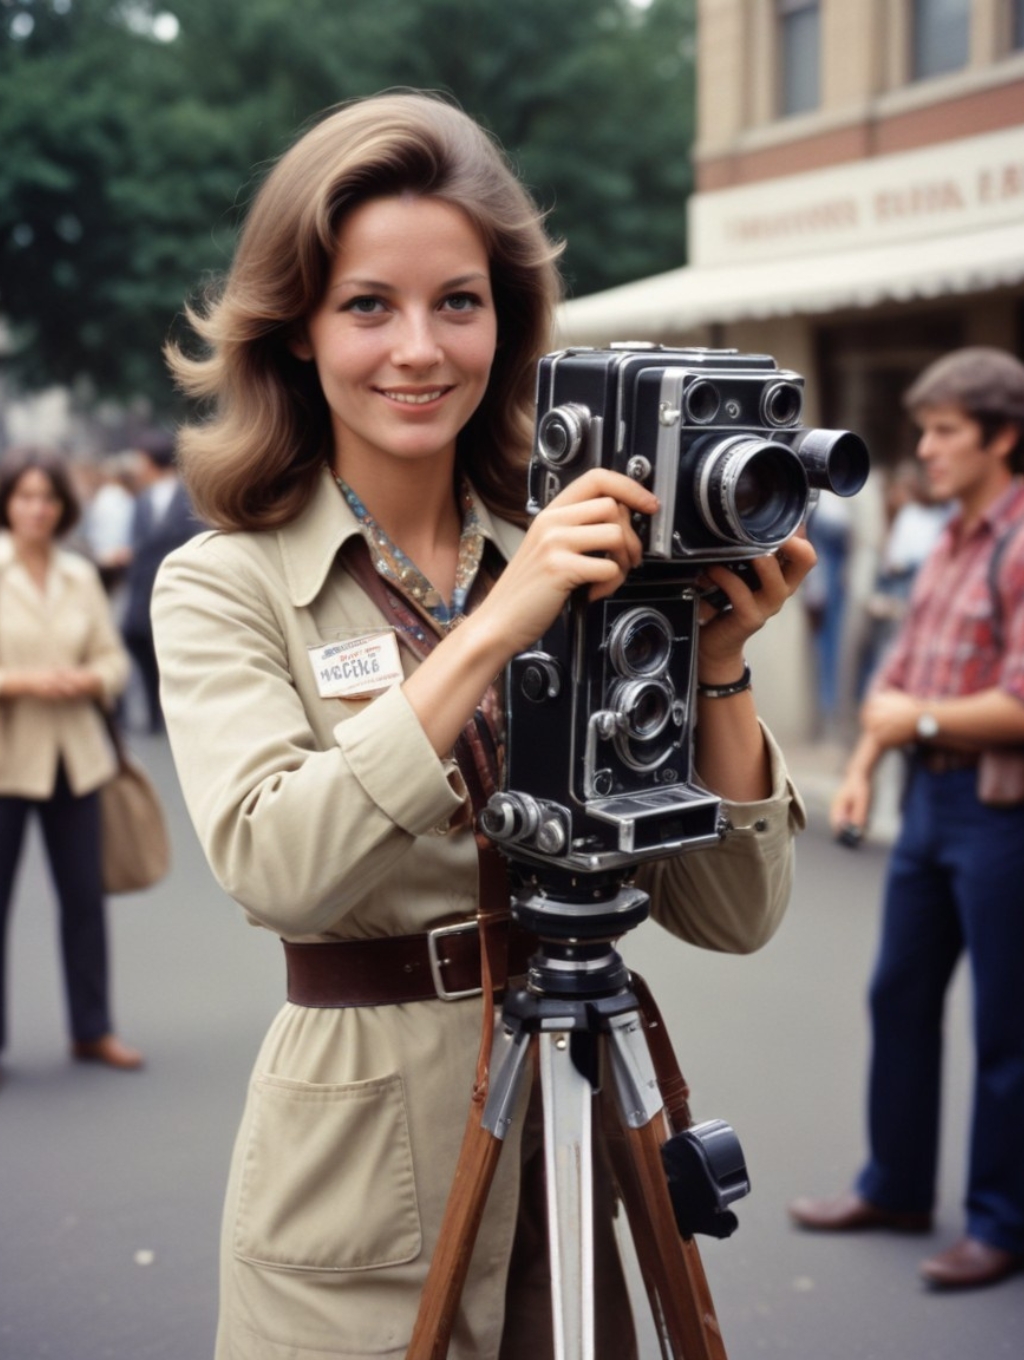 Vintage Paparazzi Women: Snapshot Frames & Photographs-Theme:3